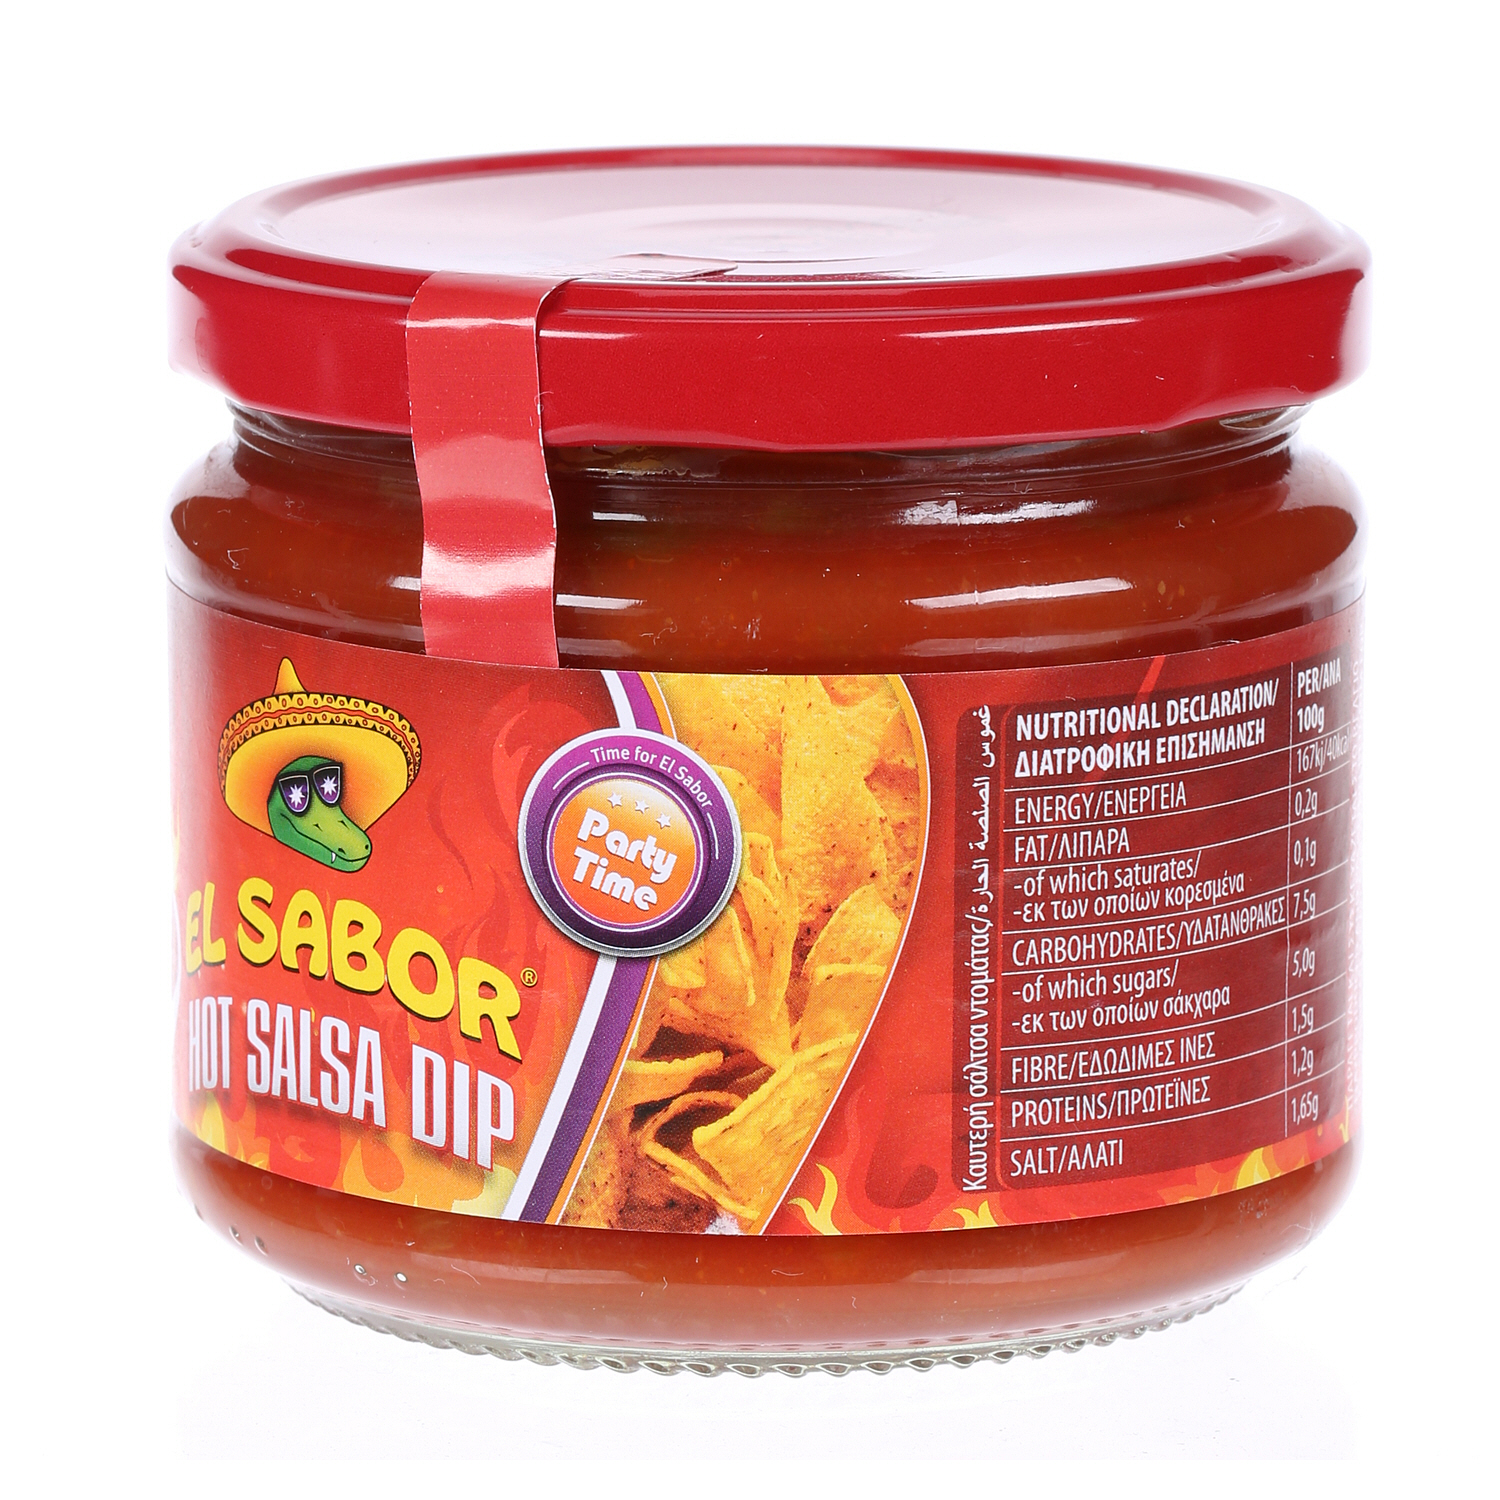 El Sabor Hot Salsa Dip Jar 300 g